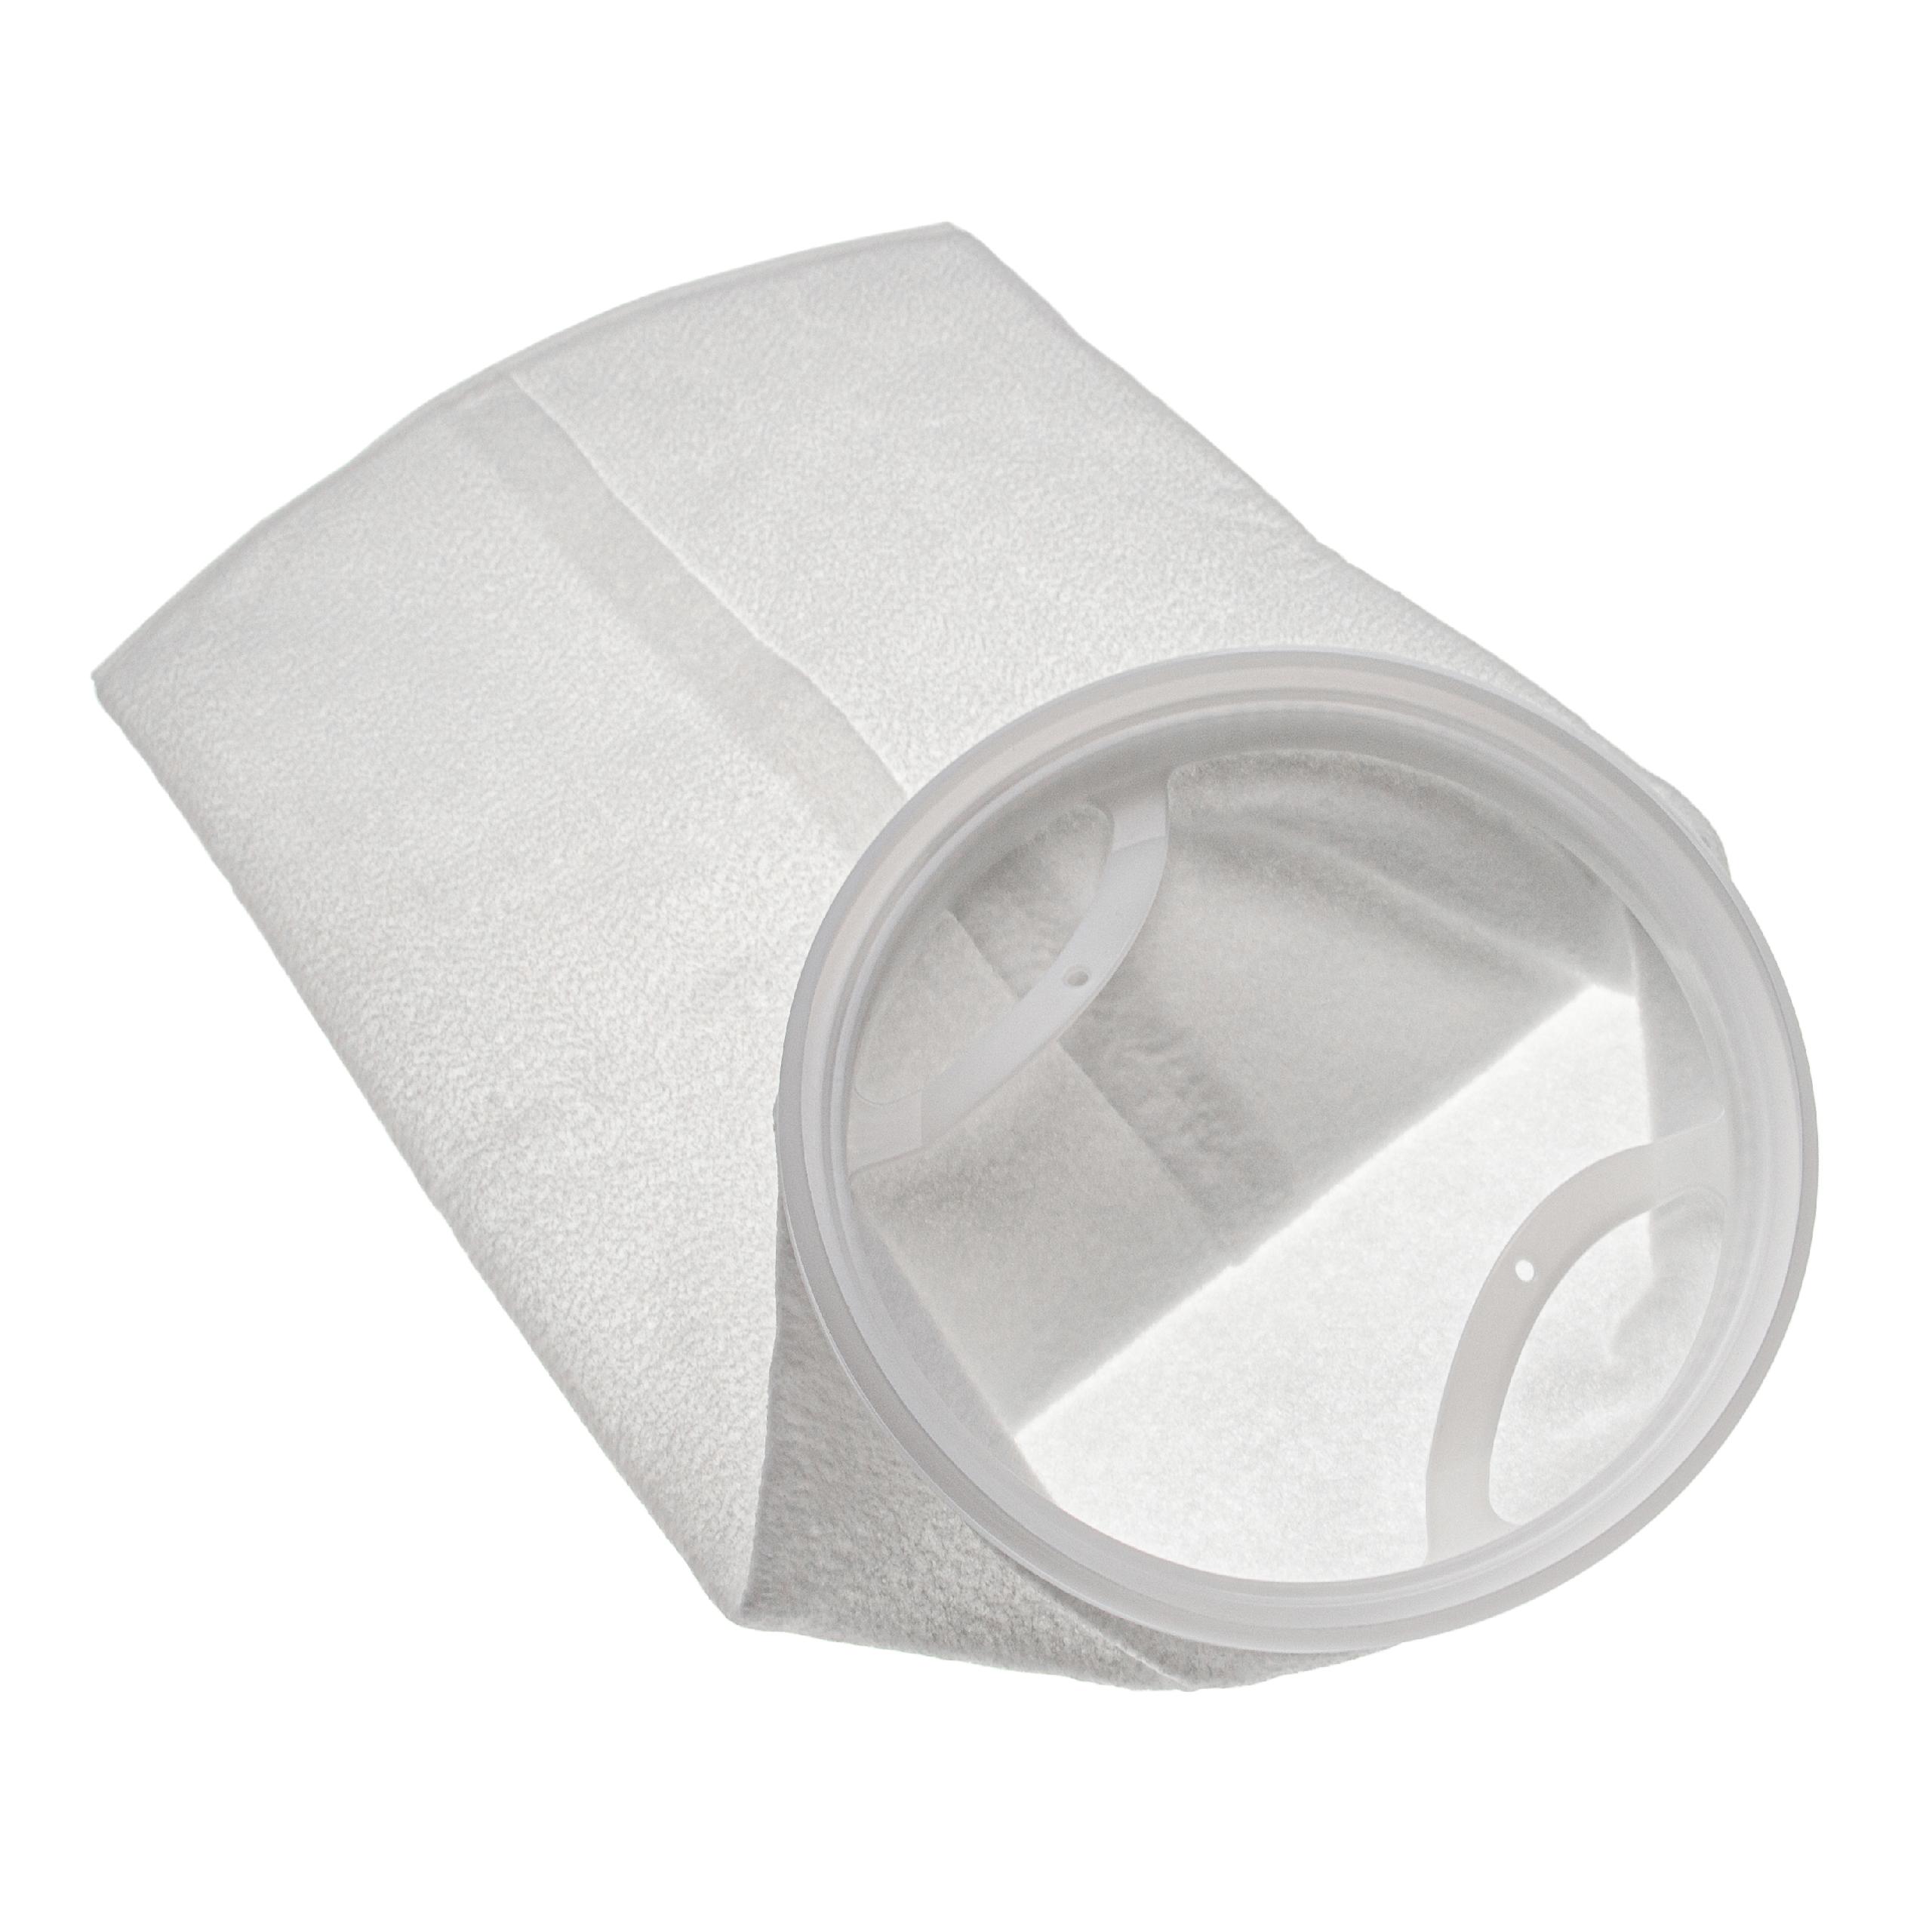 5x Filtersocke passend für Aquarien, Pools, Skimmer - Filterbeutel, Polyethylen, 18 x 45cm, 100µm